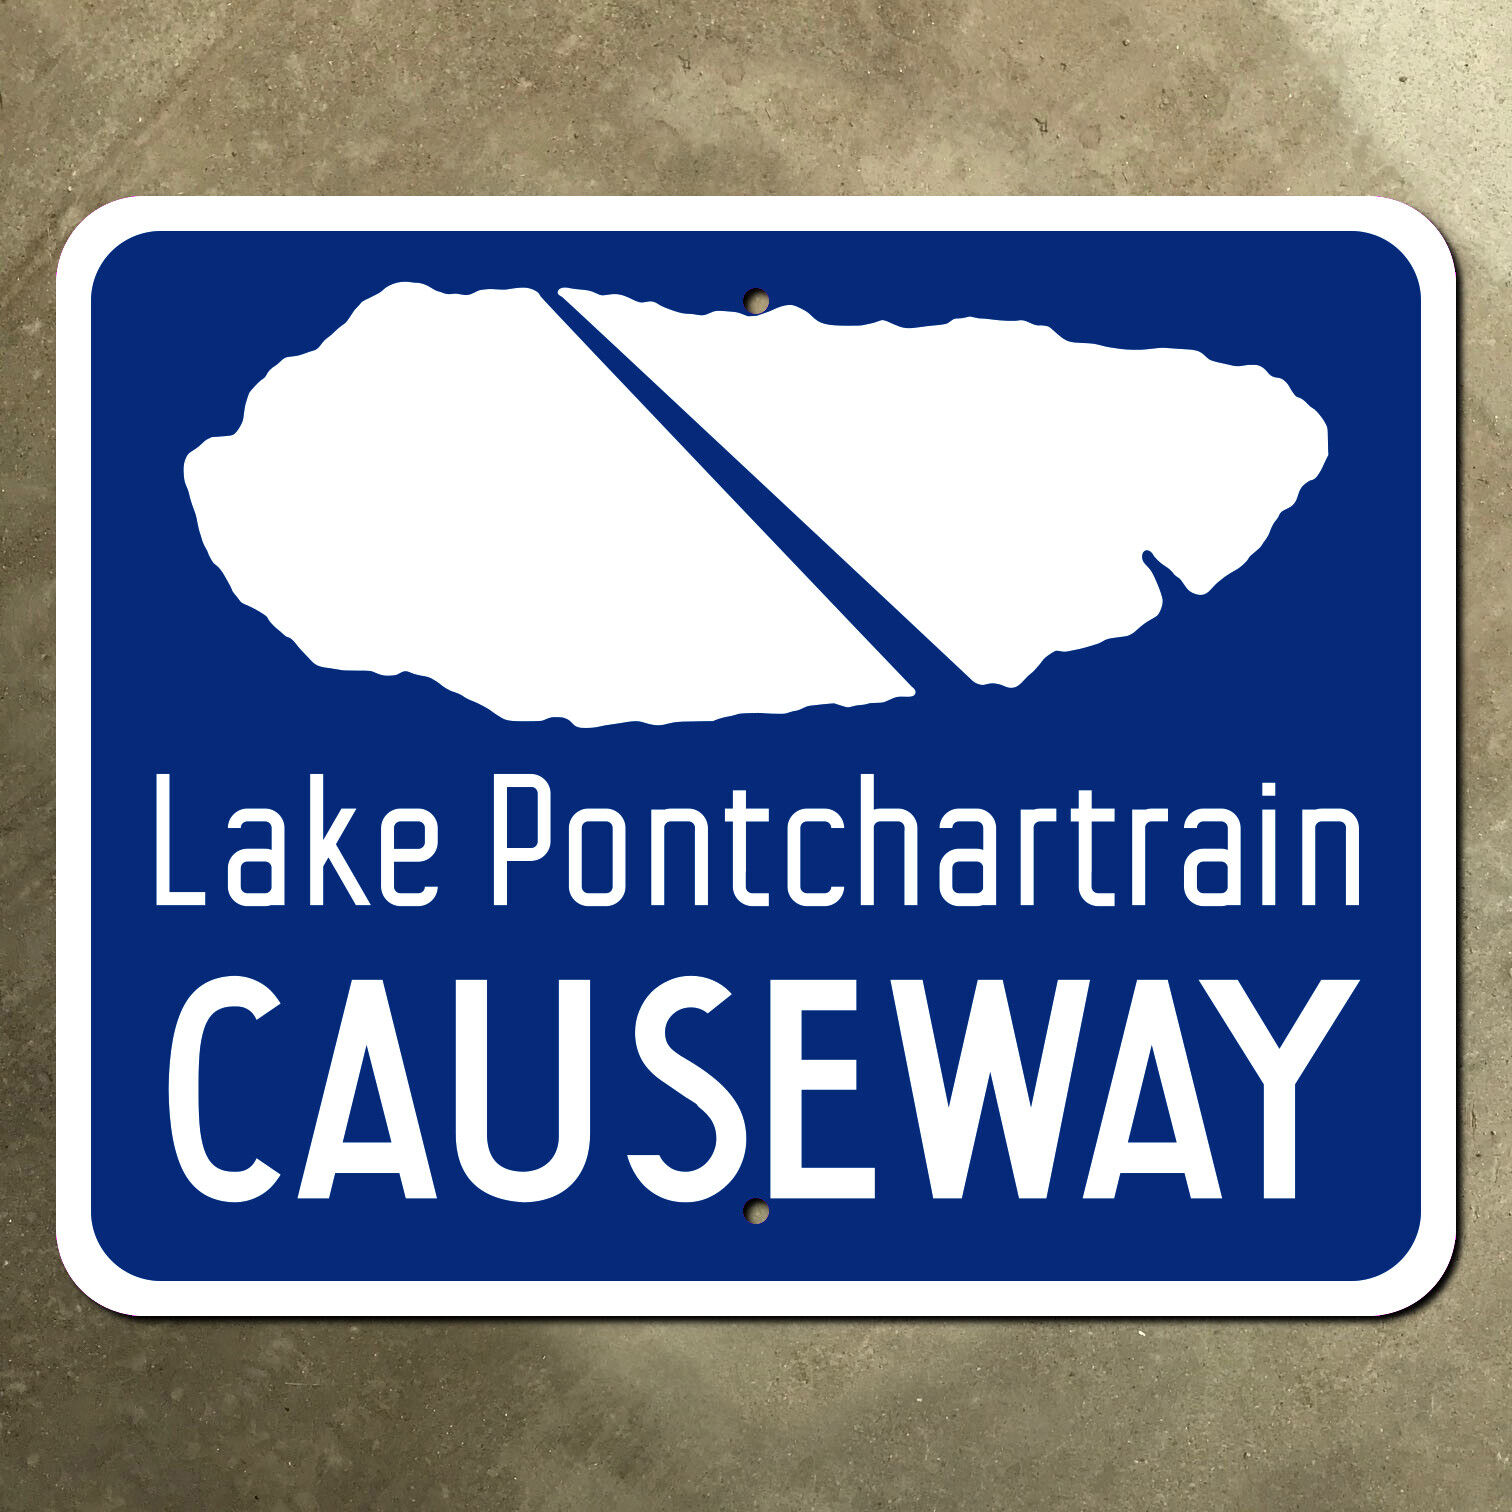 Louisiana Lake Pontchartrain Causeway highway marker road sign 20x16 1956